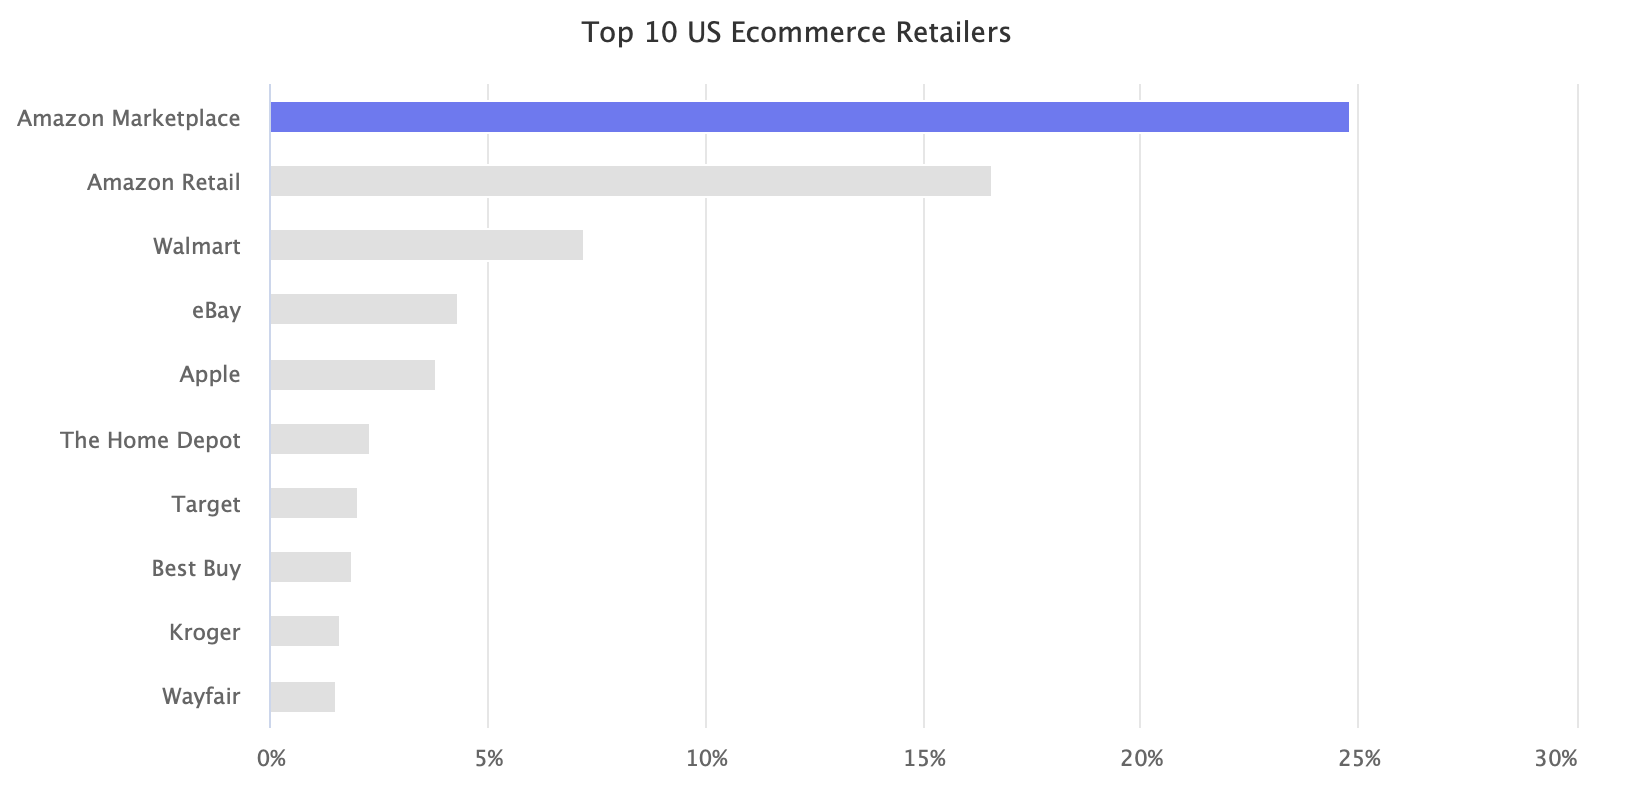 Top 10 US Ecommerce Retailers